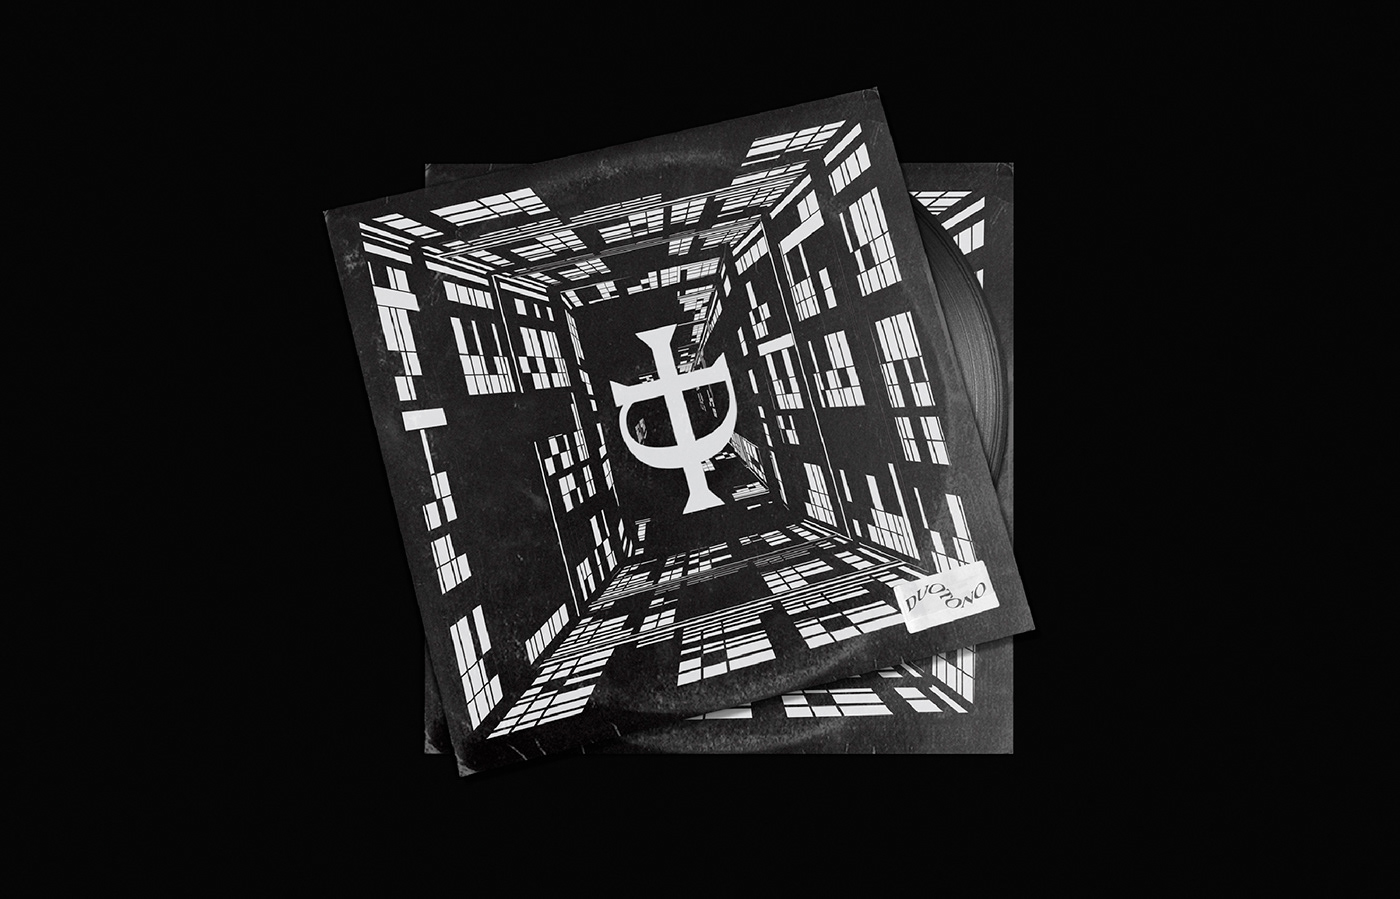 music brutal Super minimal dark black white Brutal Design techno electrinic music album cover design